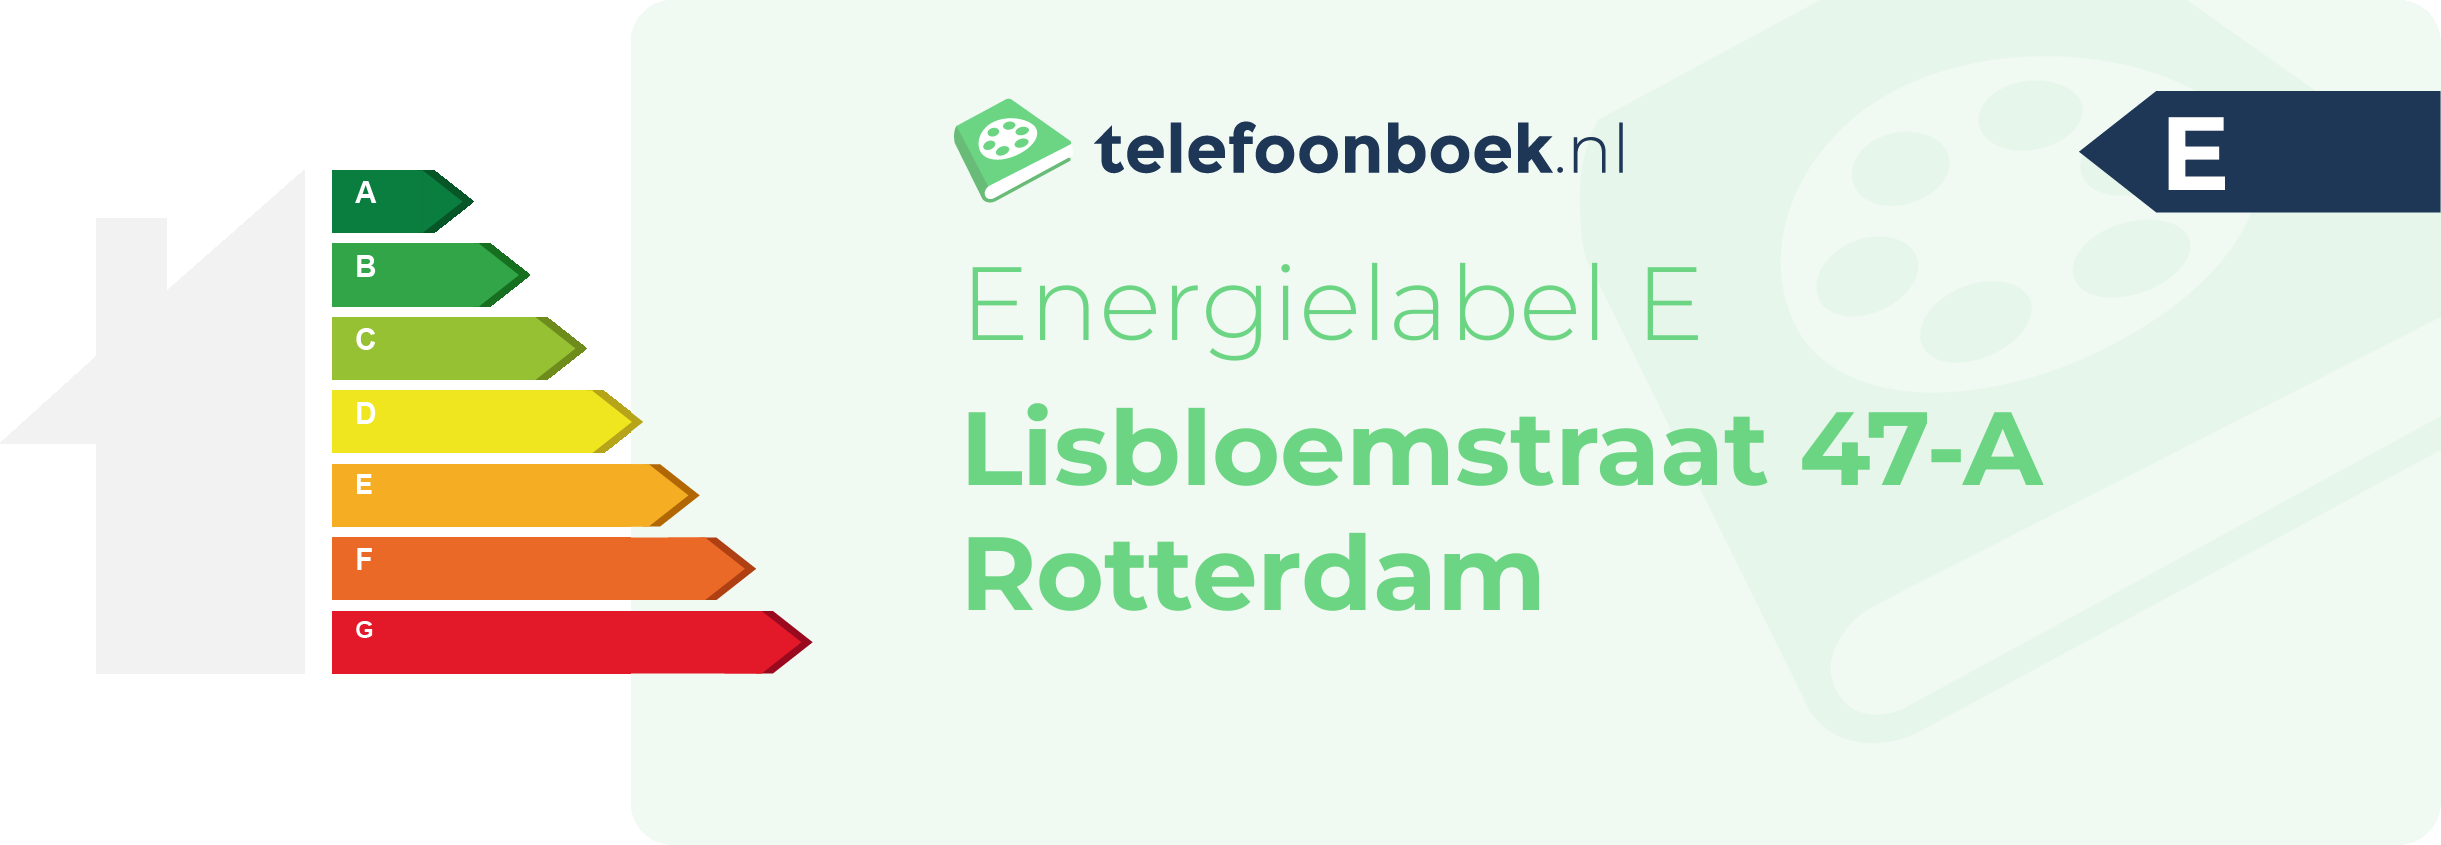 Energielabel Lisbloemstraat 47-A Rotterdam